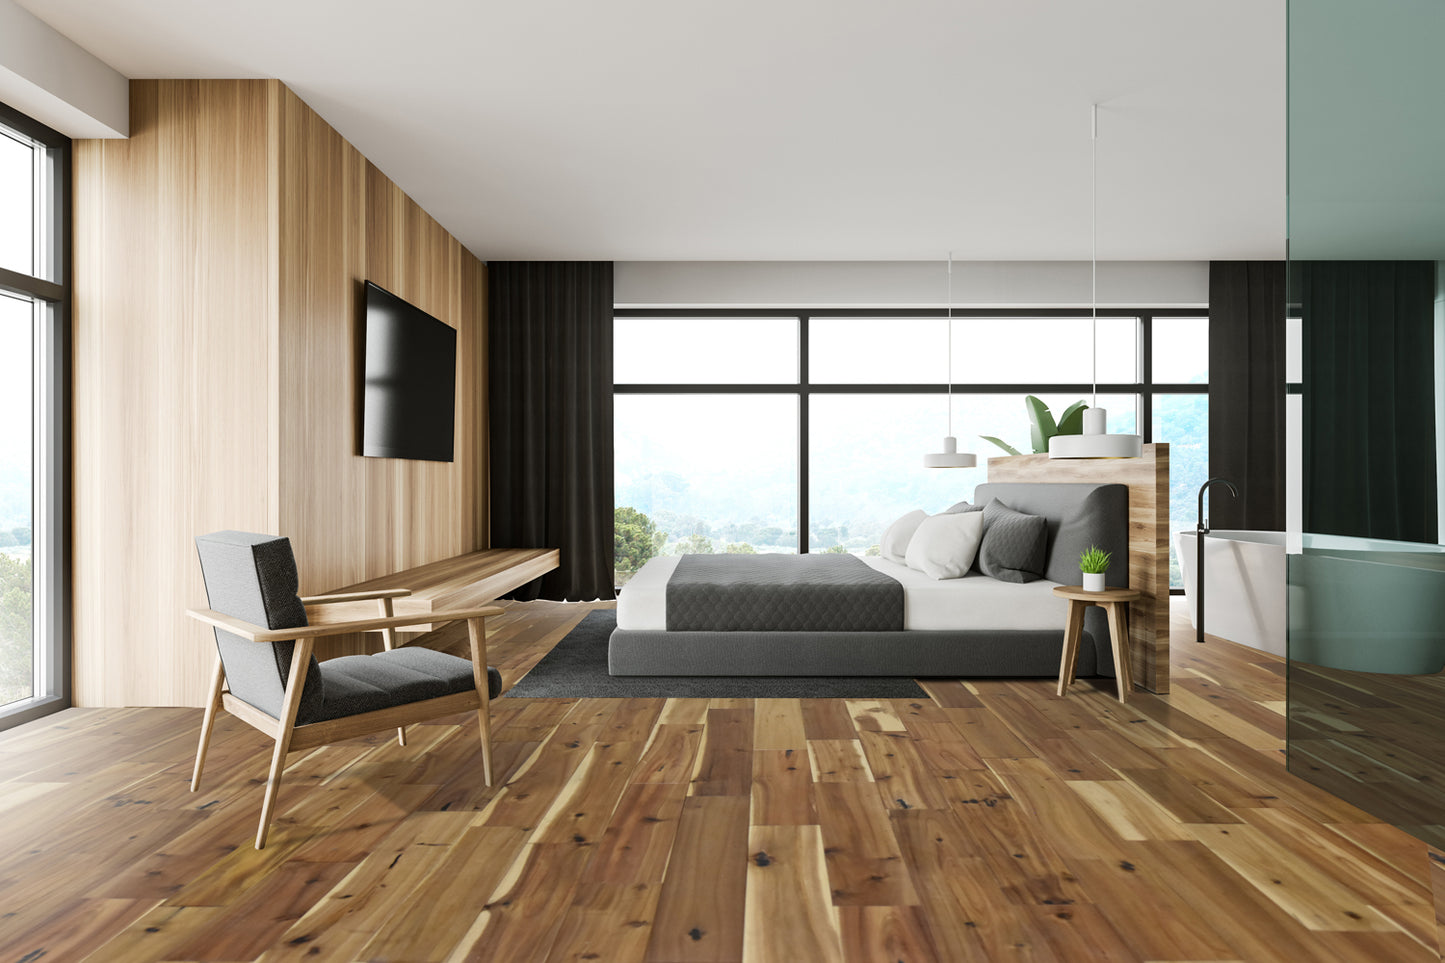 4 1/4 x 5/8 Solid Acacia Natural Stain Hardwood Flooring –